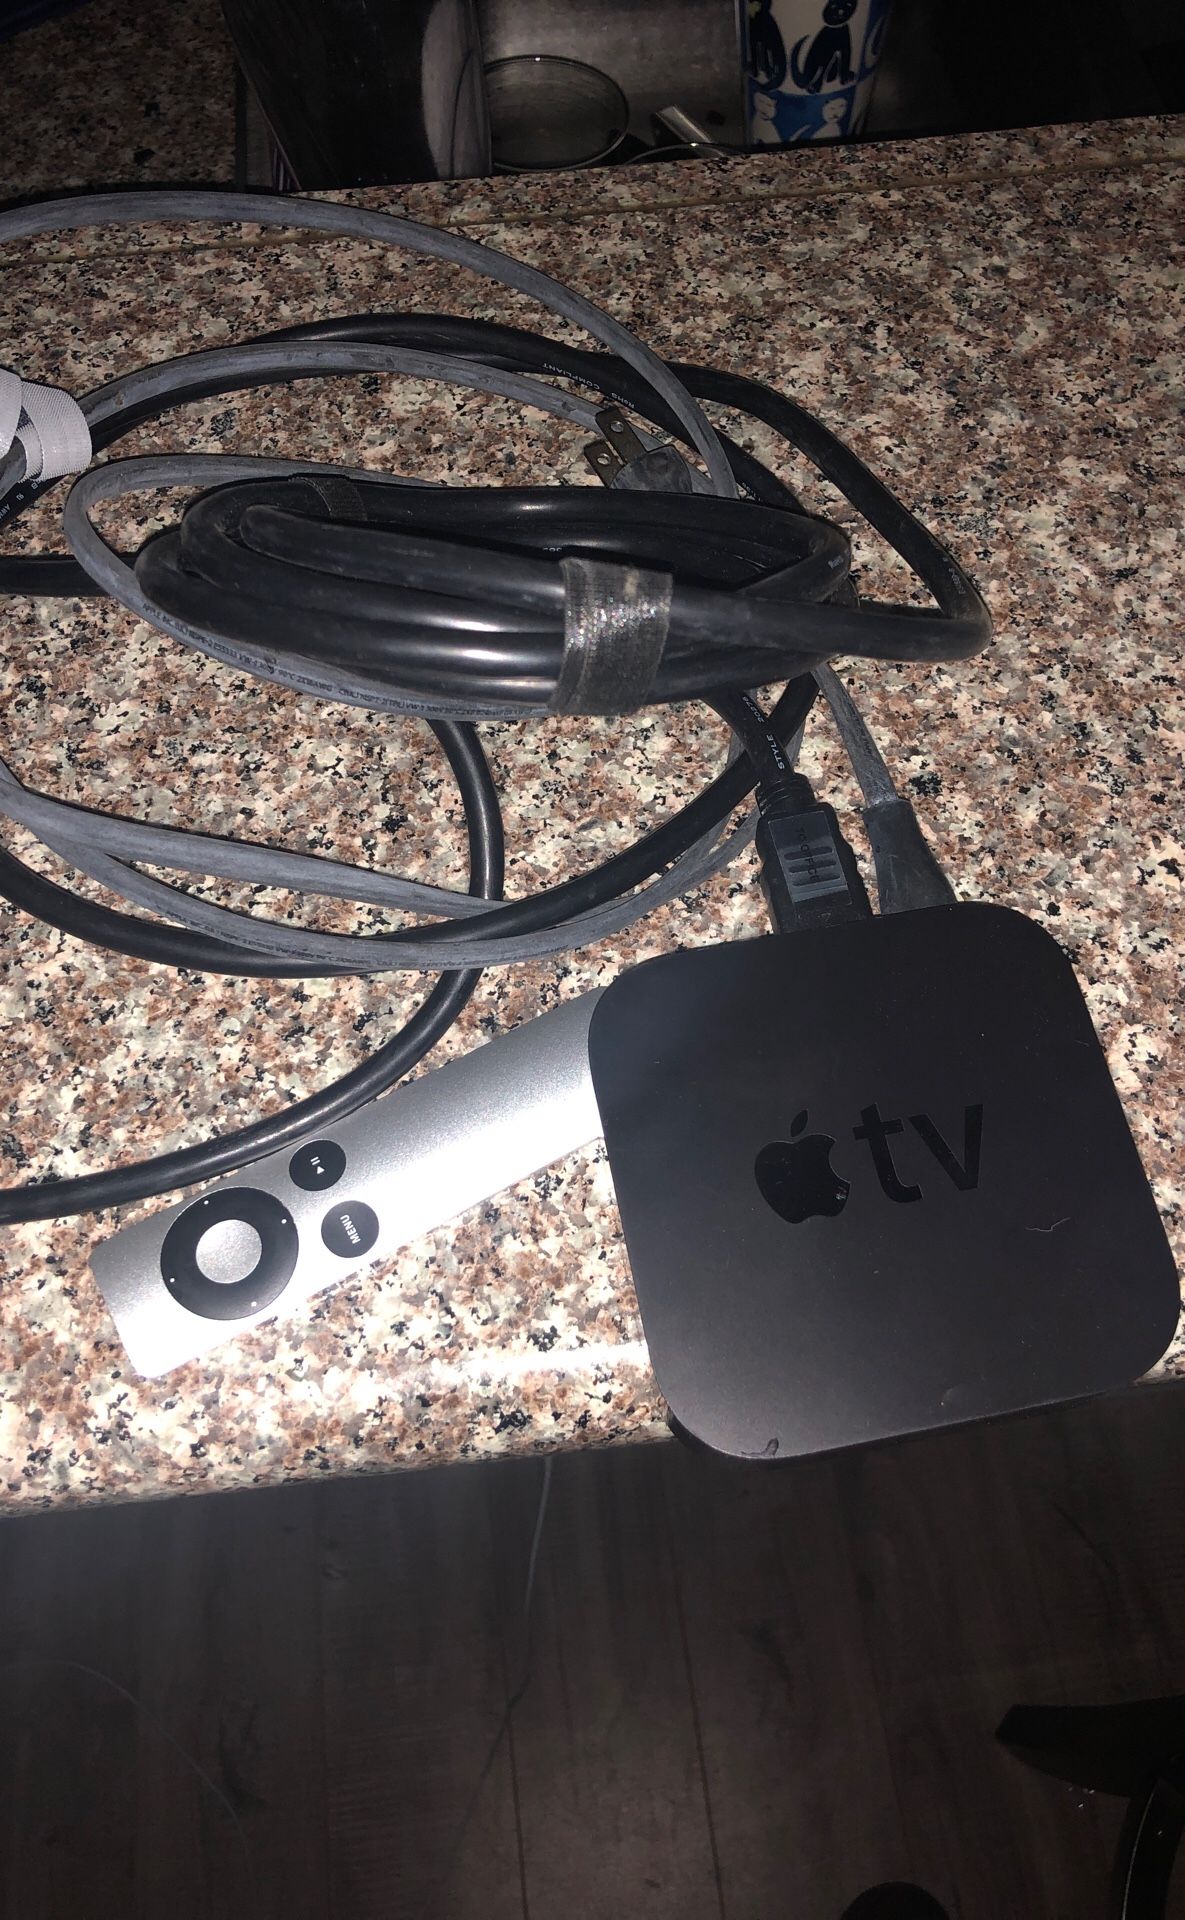 Gently used Apple TV generation 3 w/ HDMI